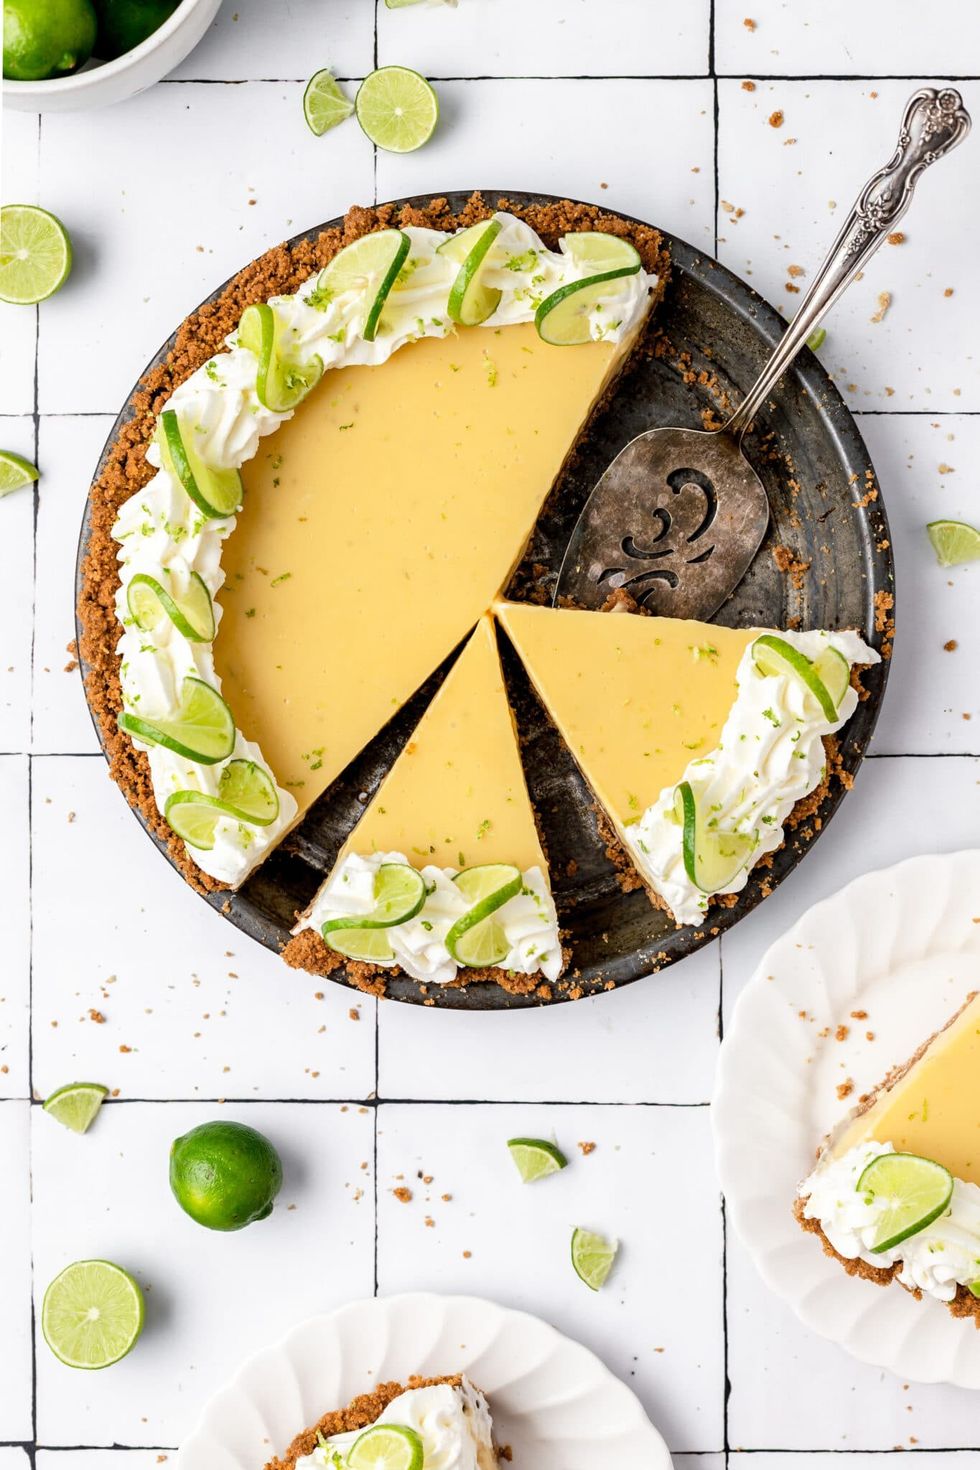 Key Lime Pie From Scratch recipe